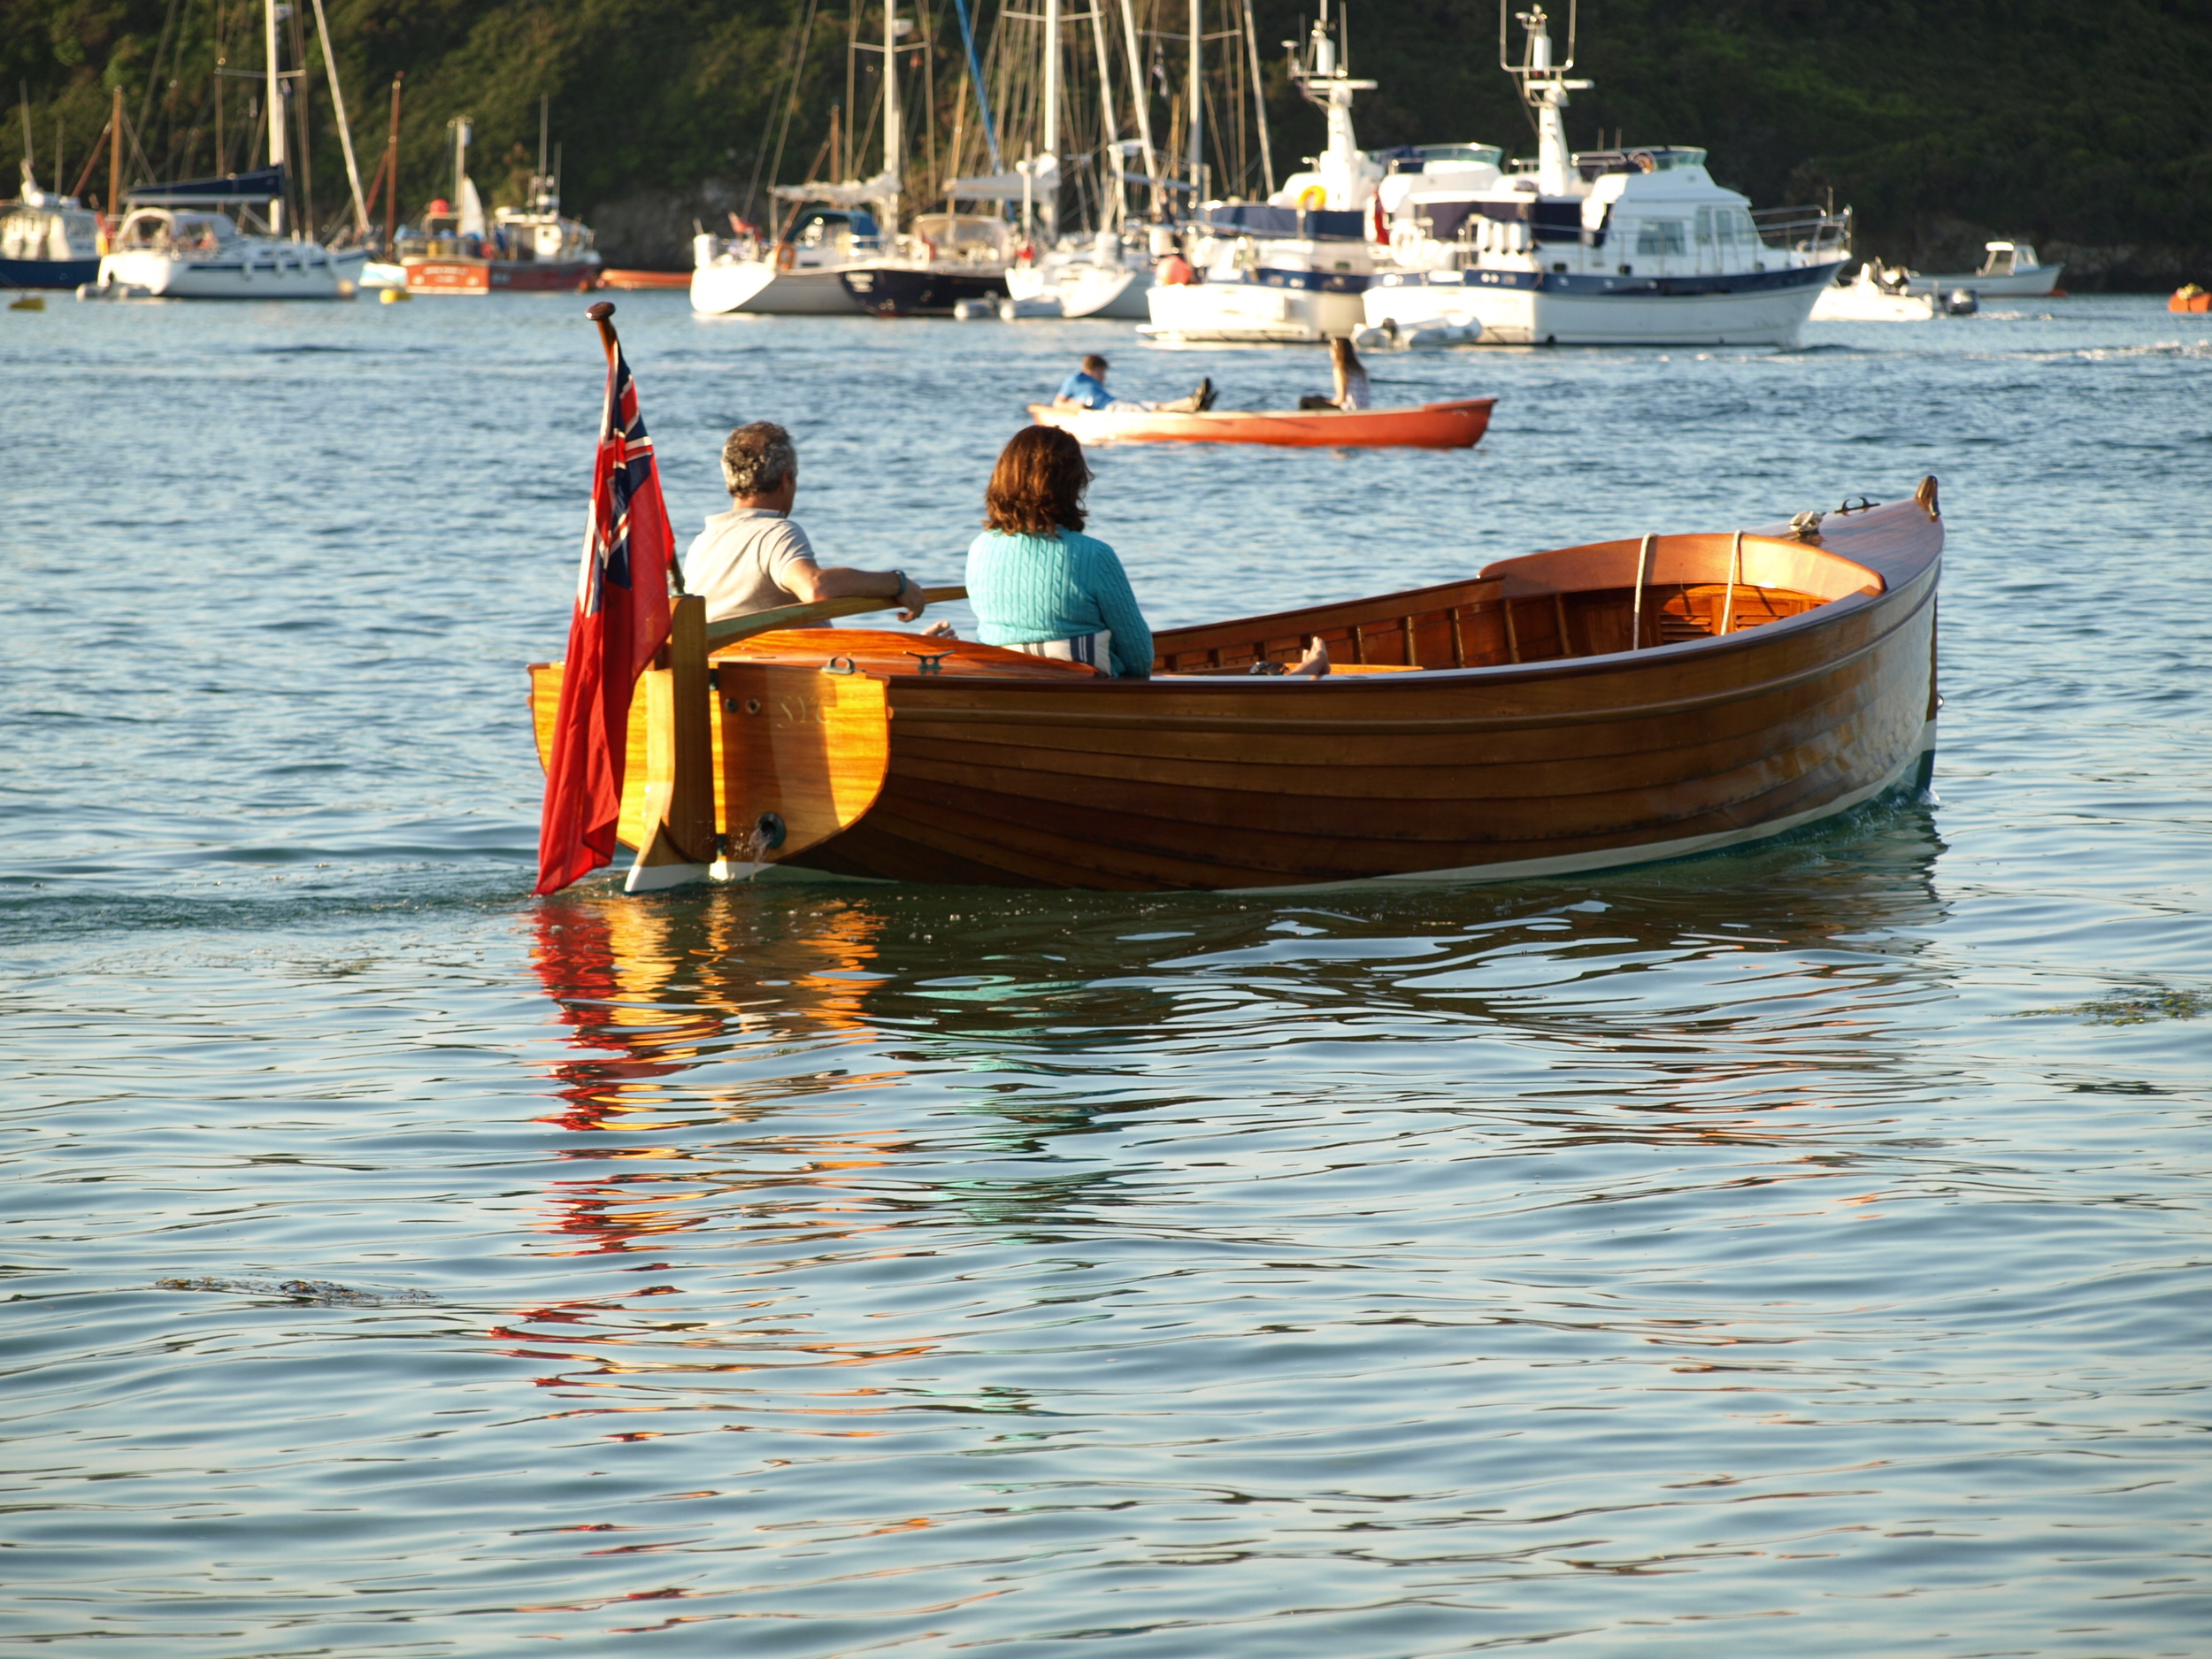 Boats on the estuary